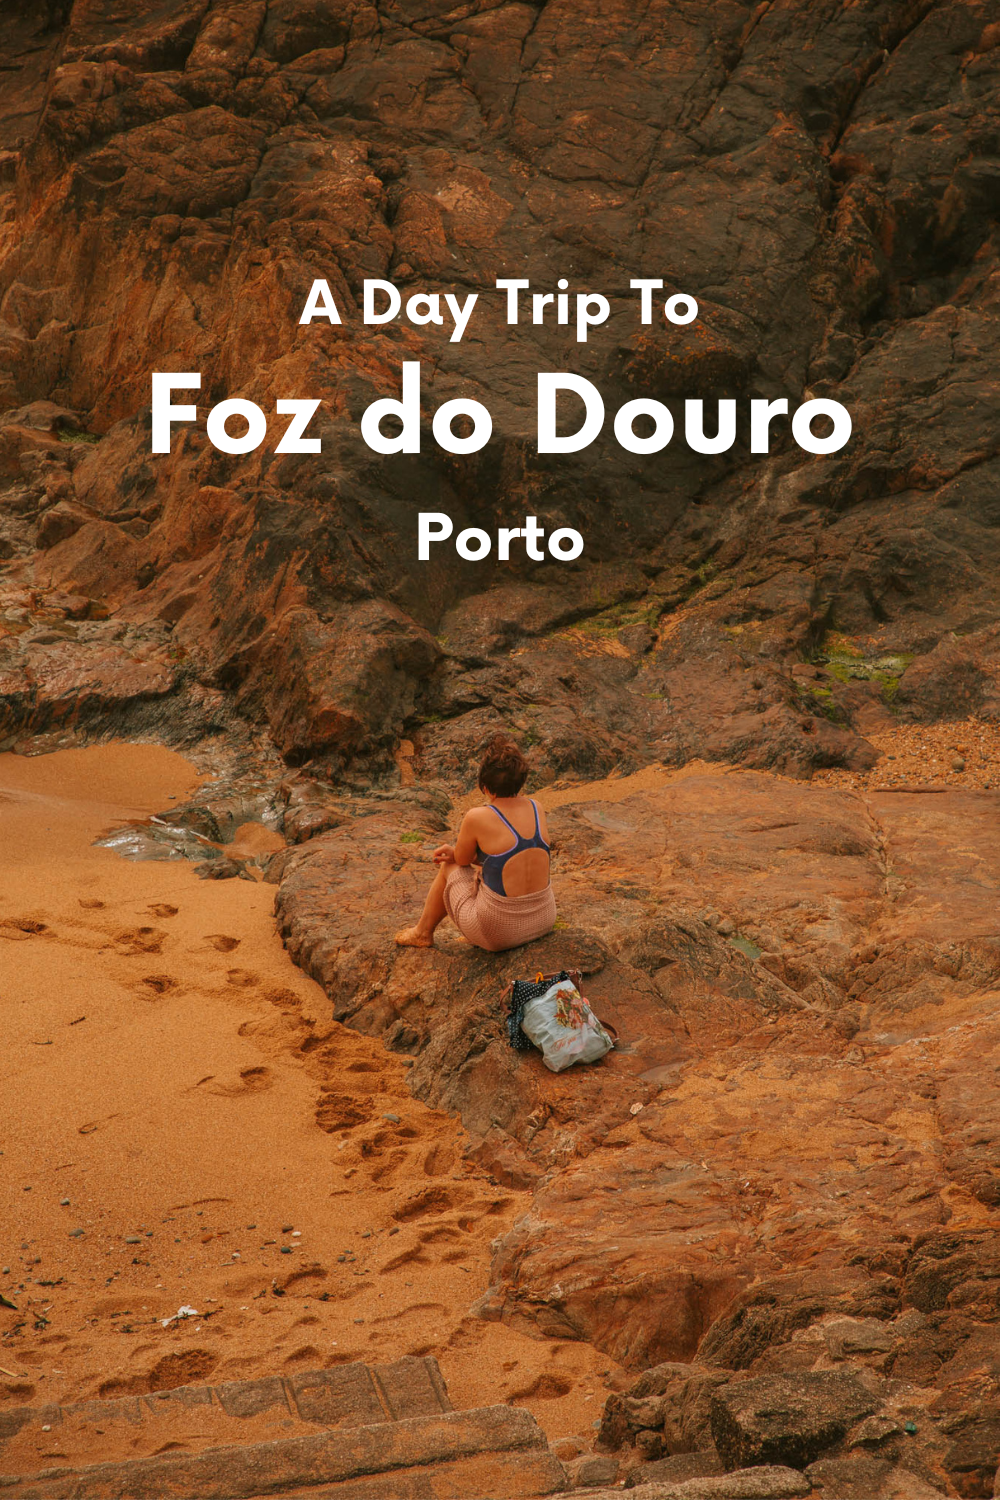 Day trip to Foz do Douro, Porto, Portugal